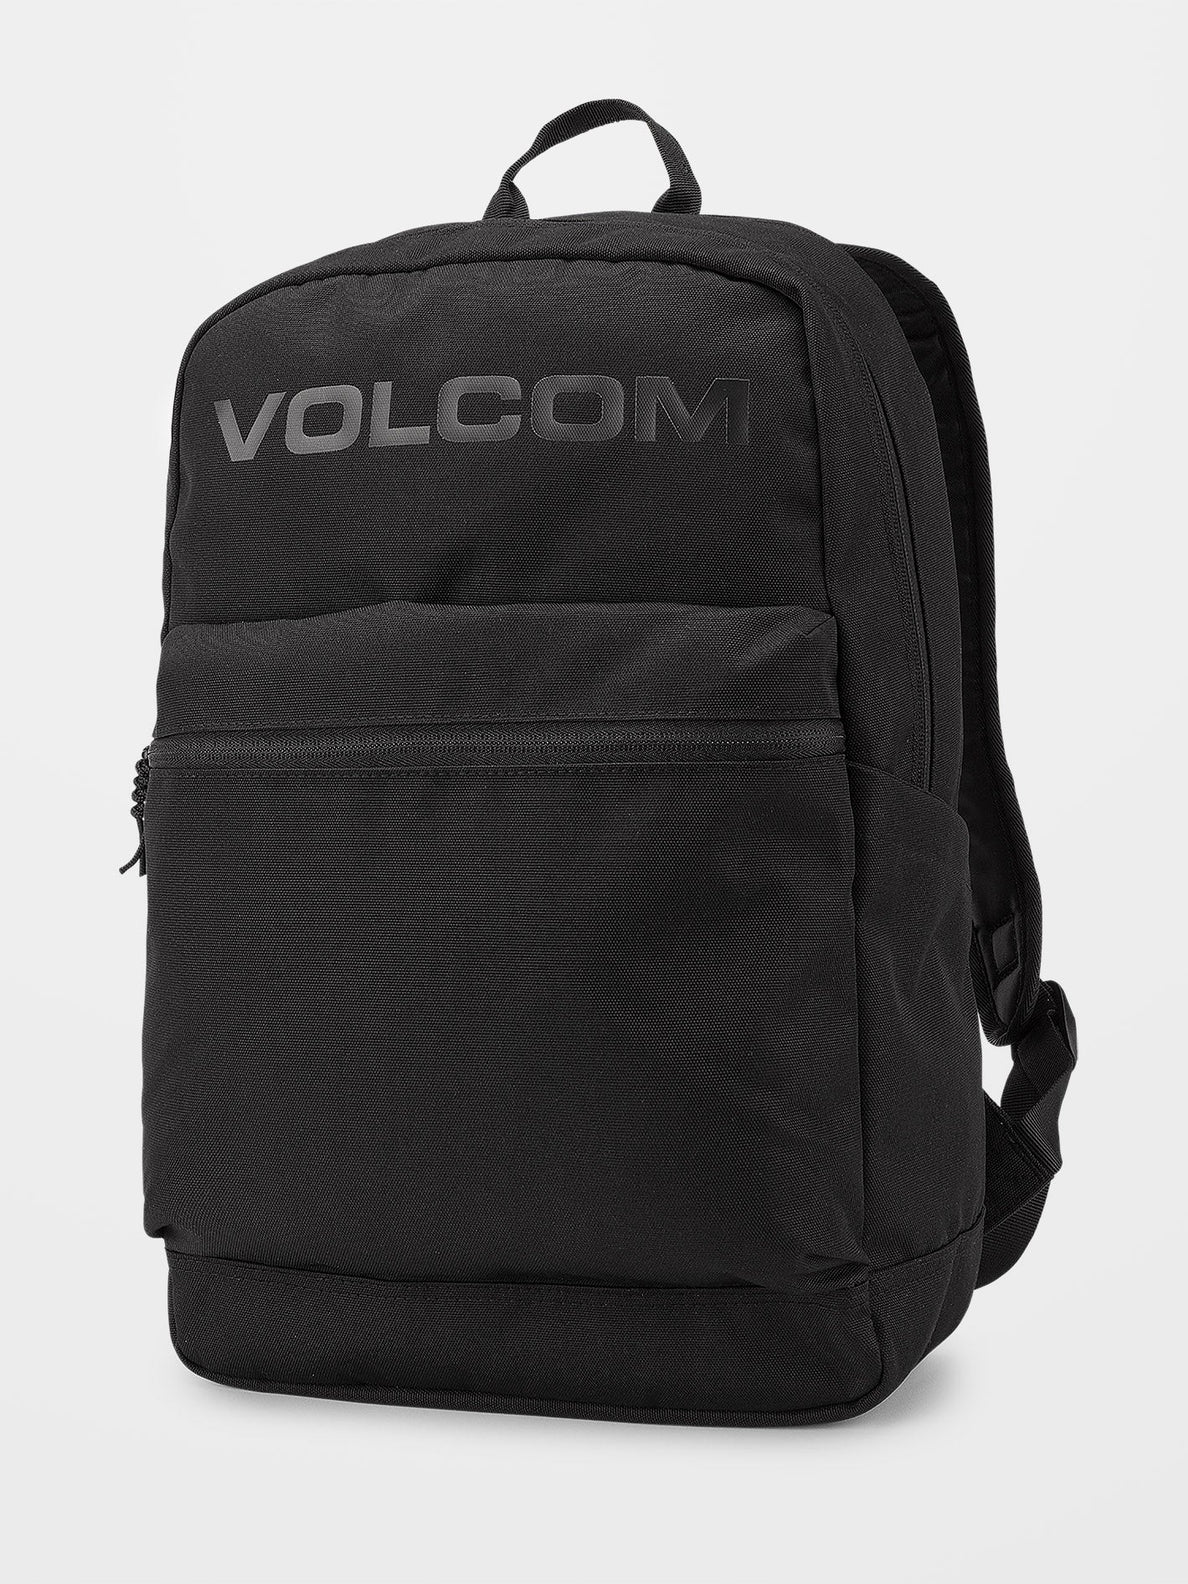 Mochila Volcom School Backpack Black on Black